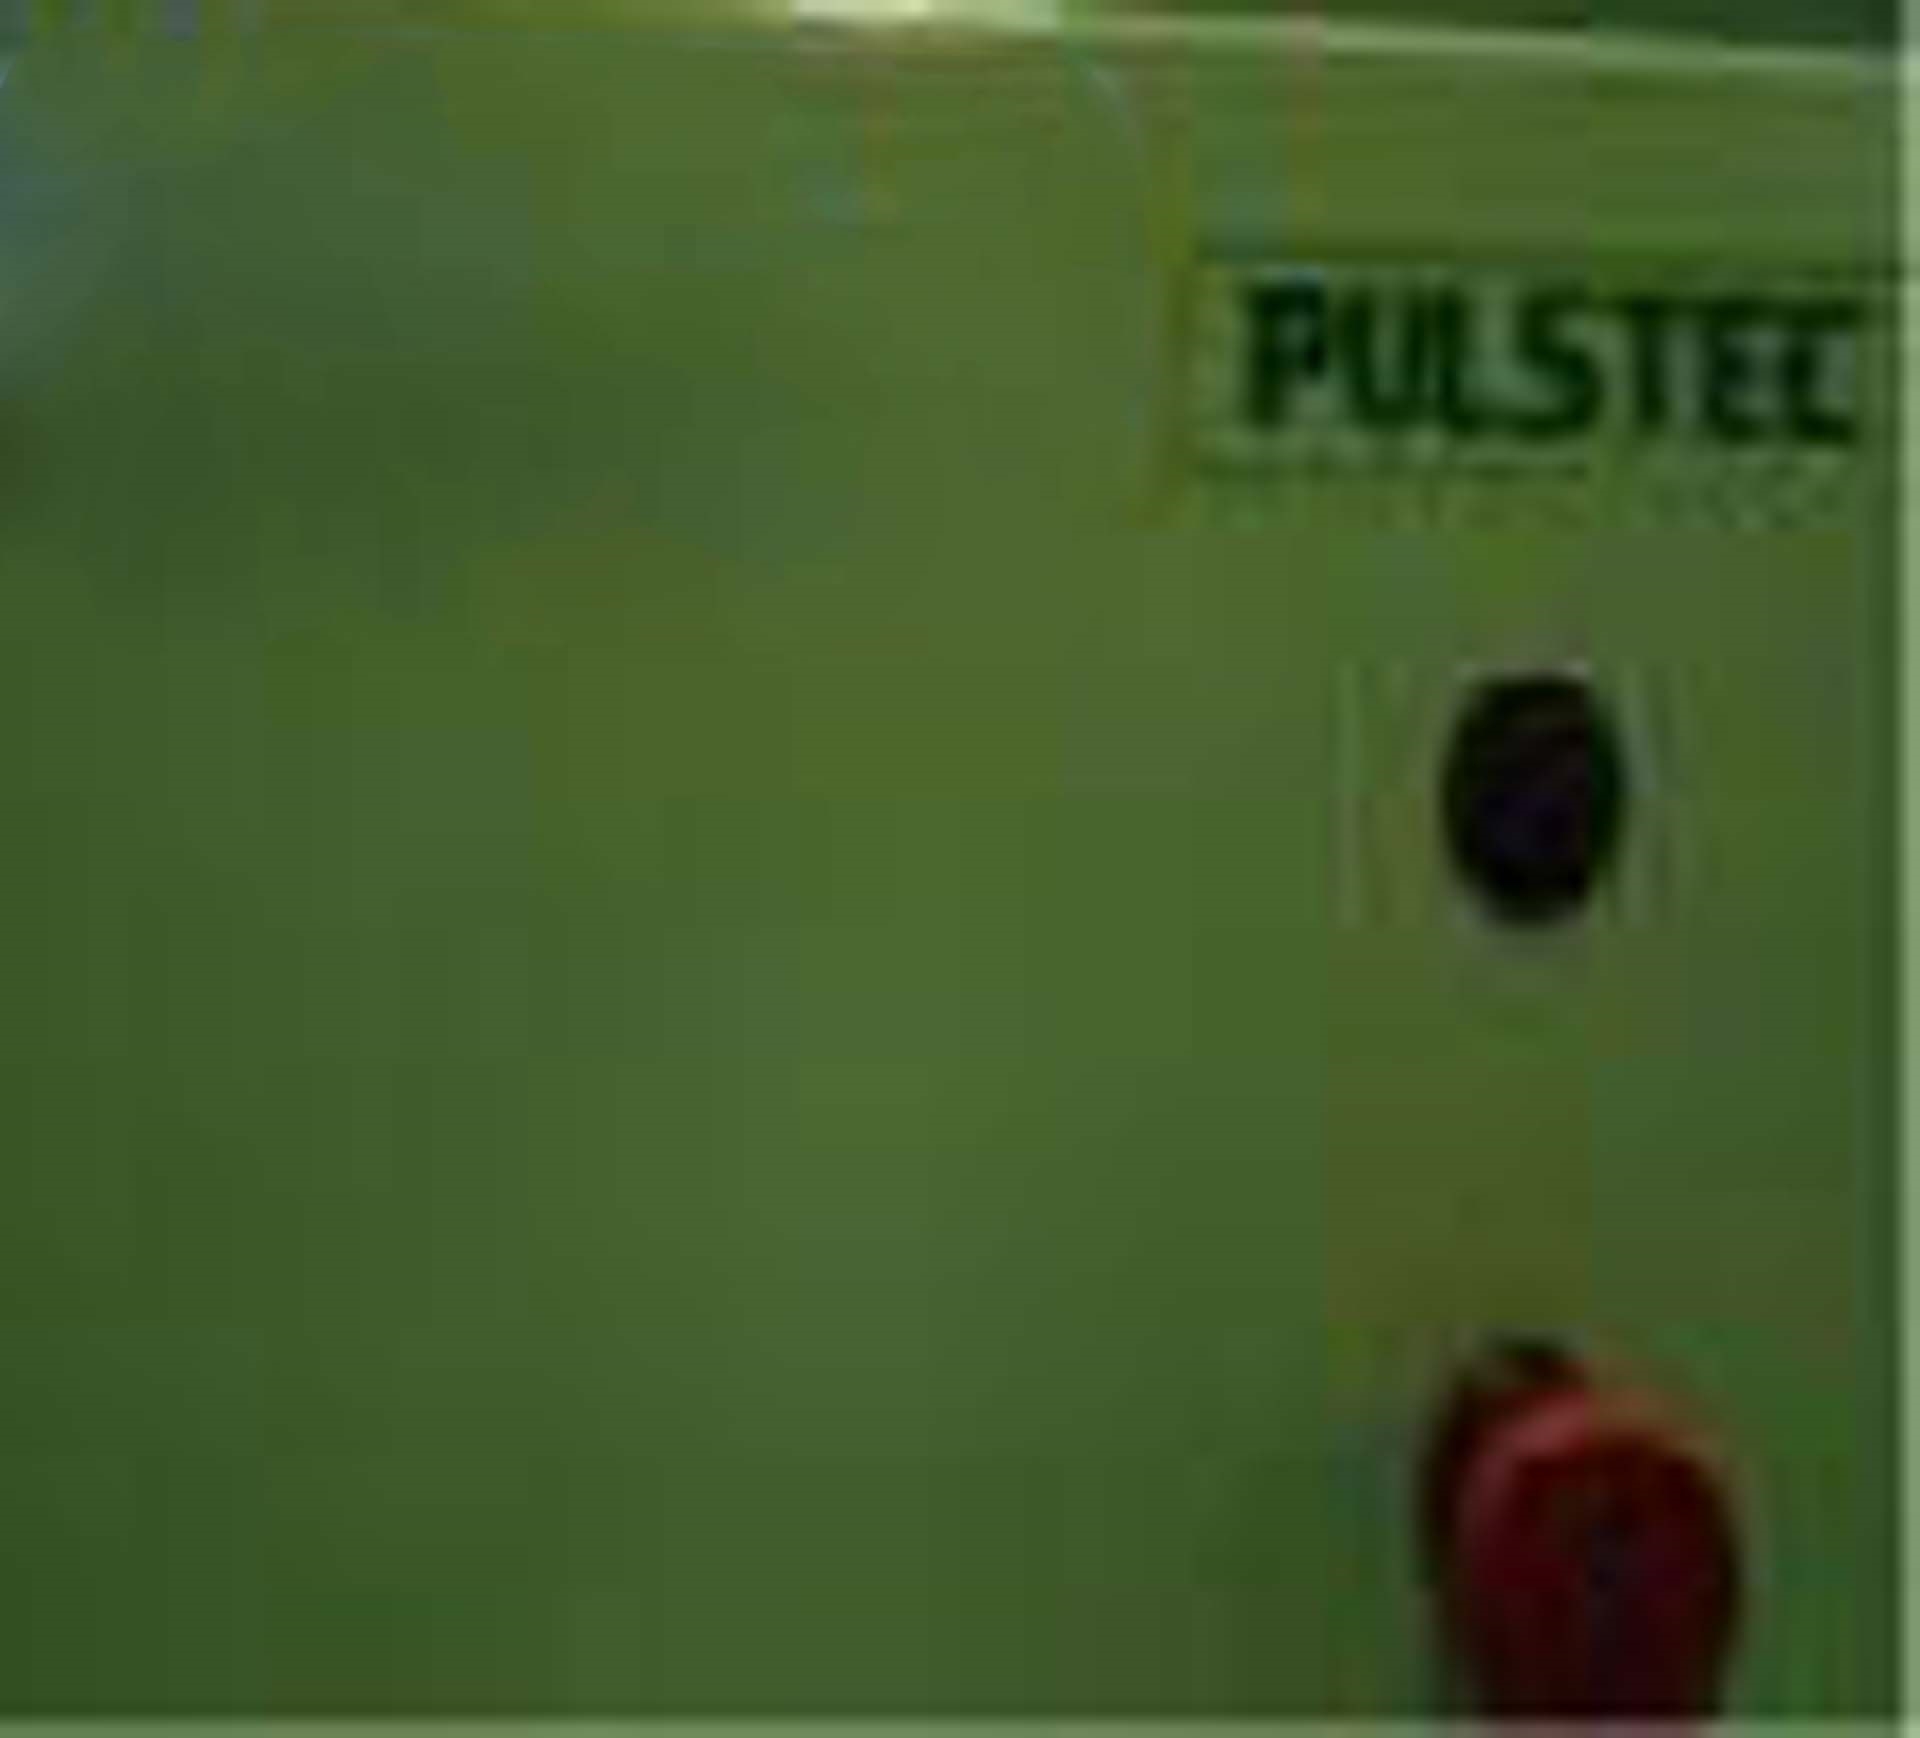 图为 已使用的 PULSTEC DHA-4000 待售